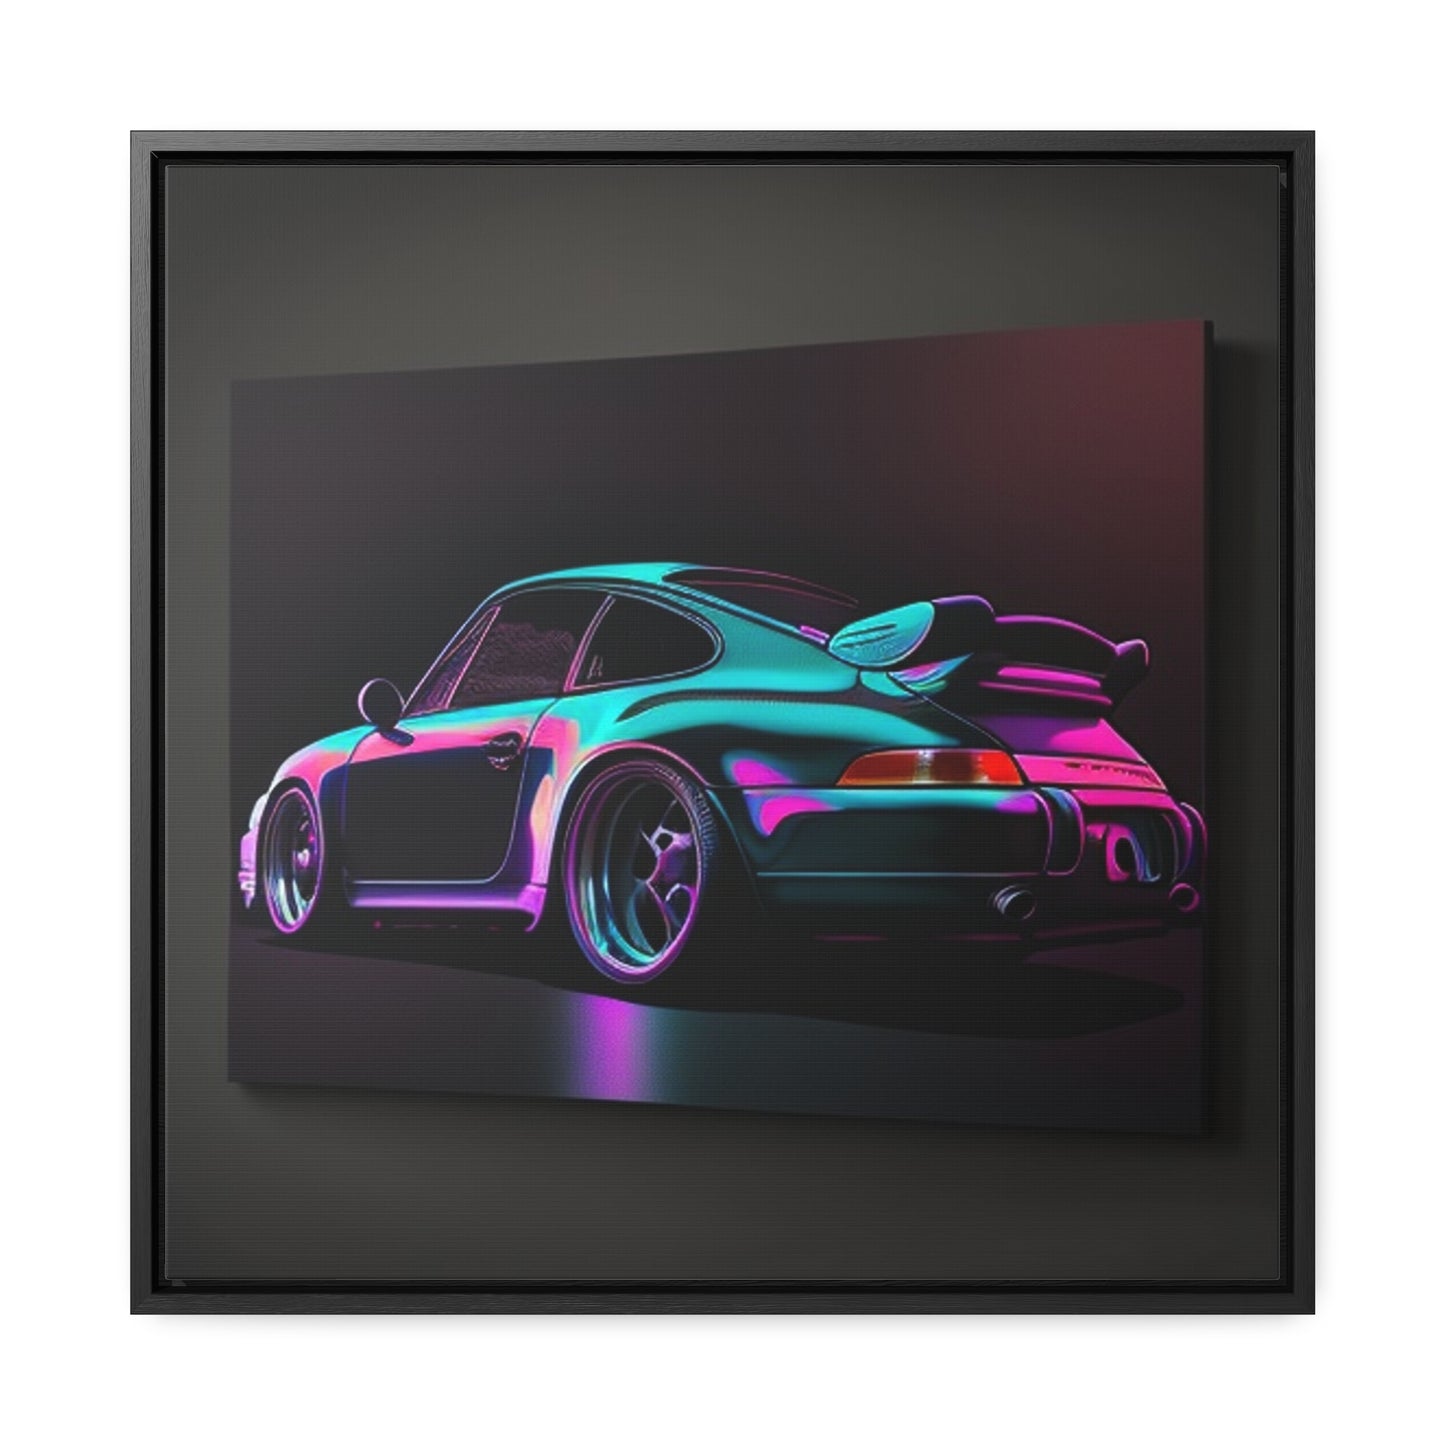 Gallery Canvas Wraps, Square Frame Porsche Purple 1